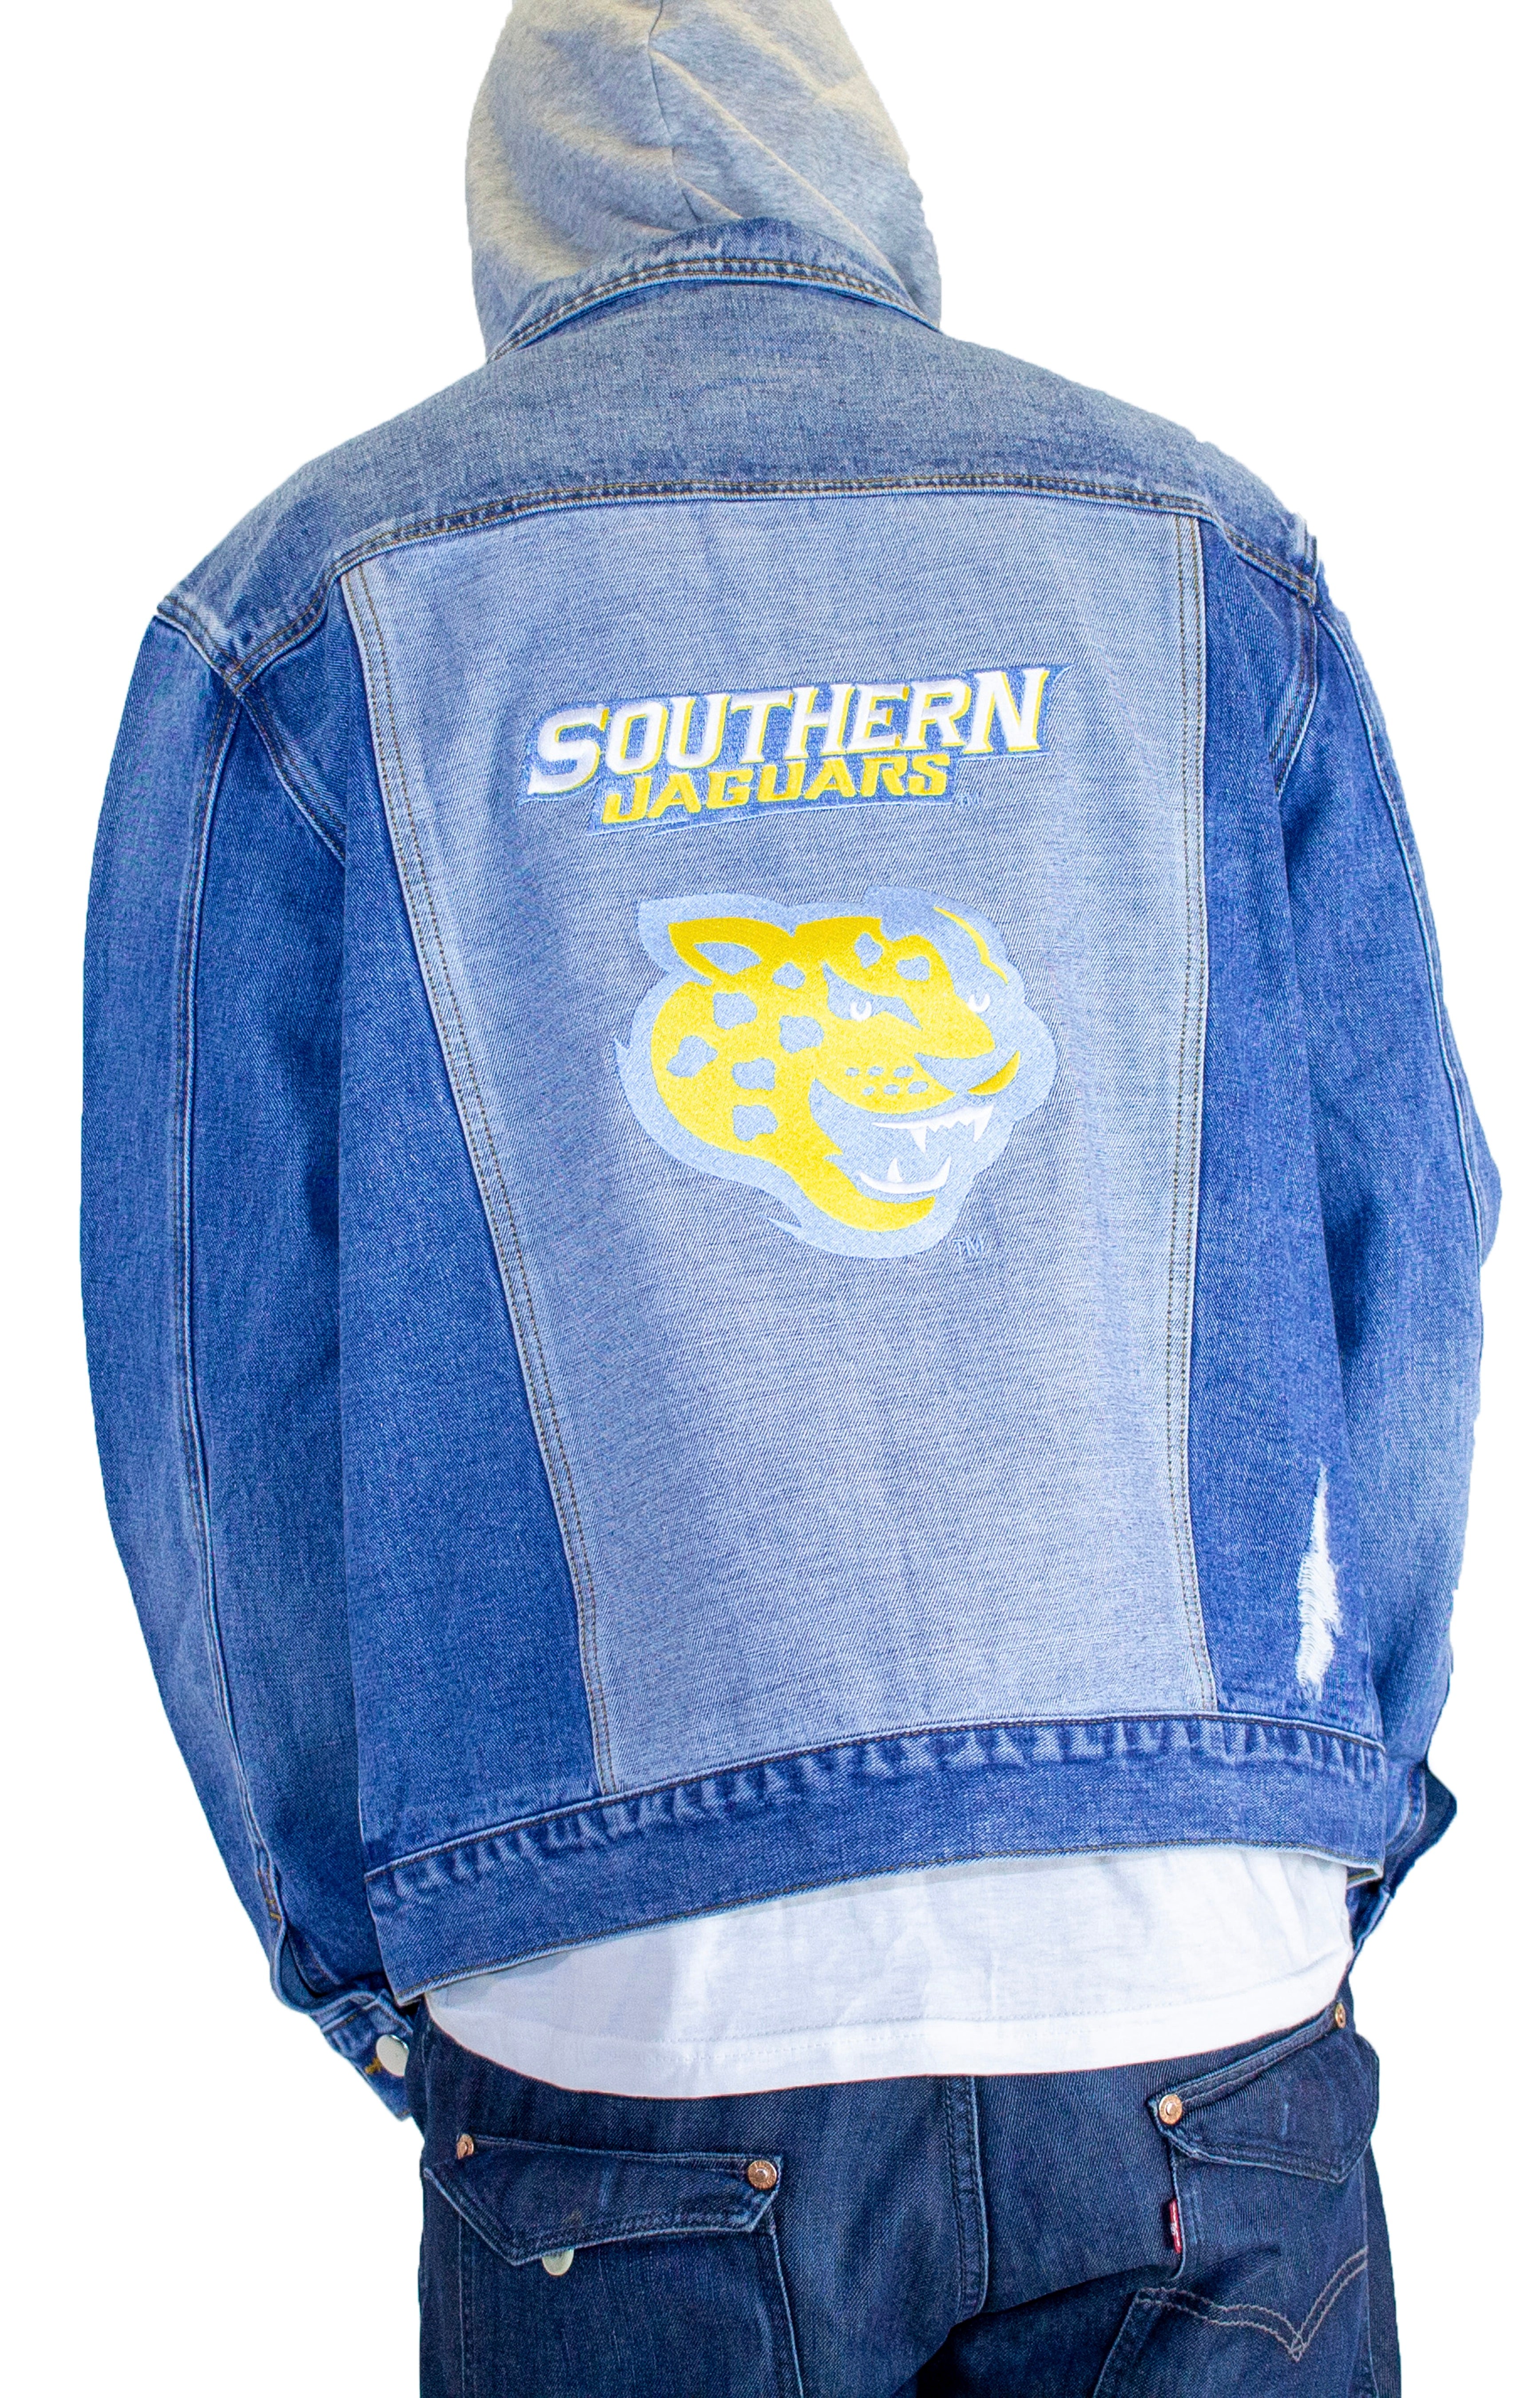 Southern University Adult Denim Jacket